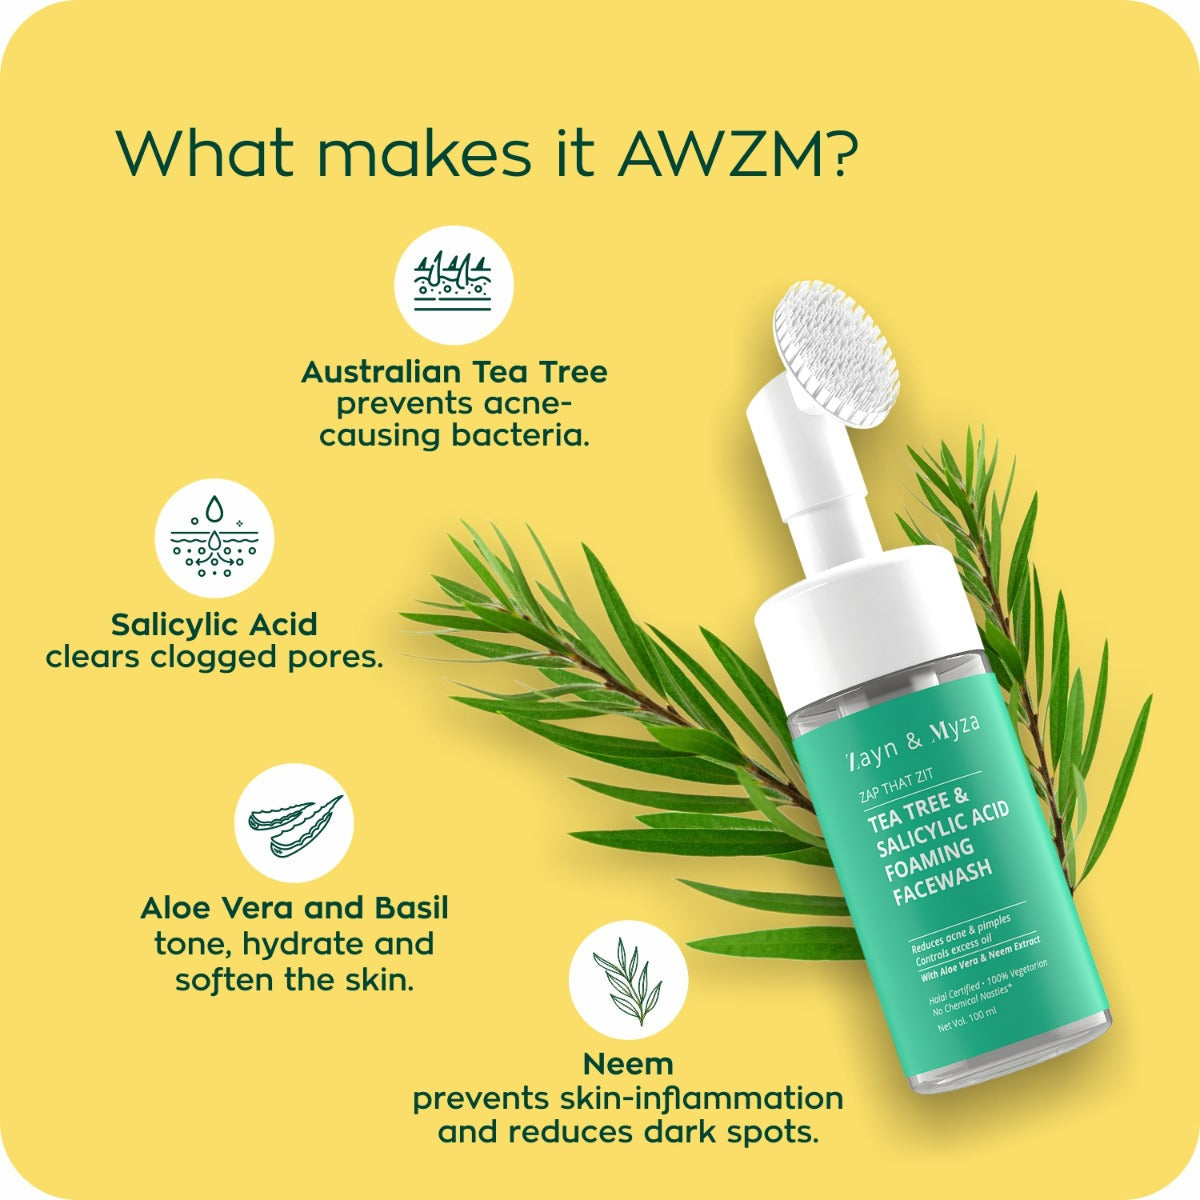 Zayn &amp; Myza Tea Tree and Salicylic Acid Foaming Face Wash for Women (100ml)